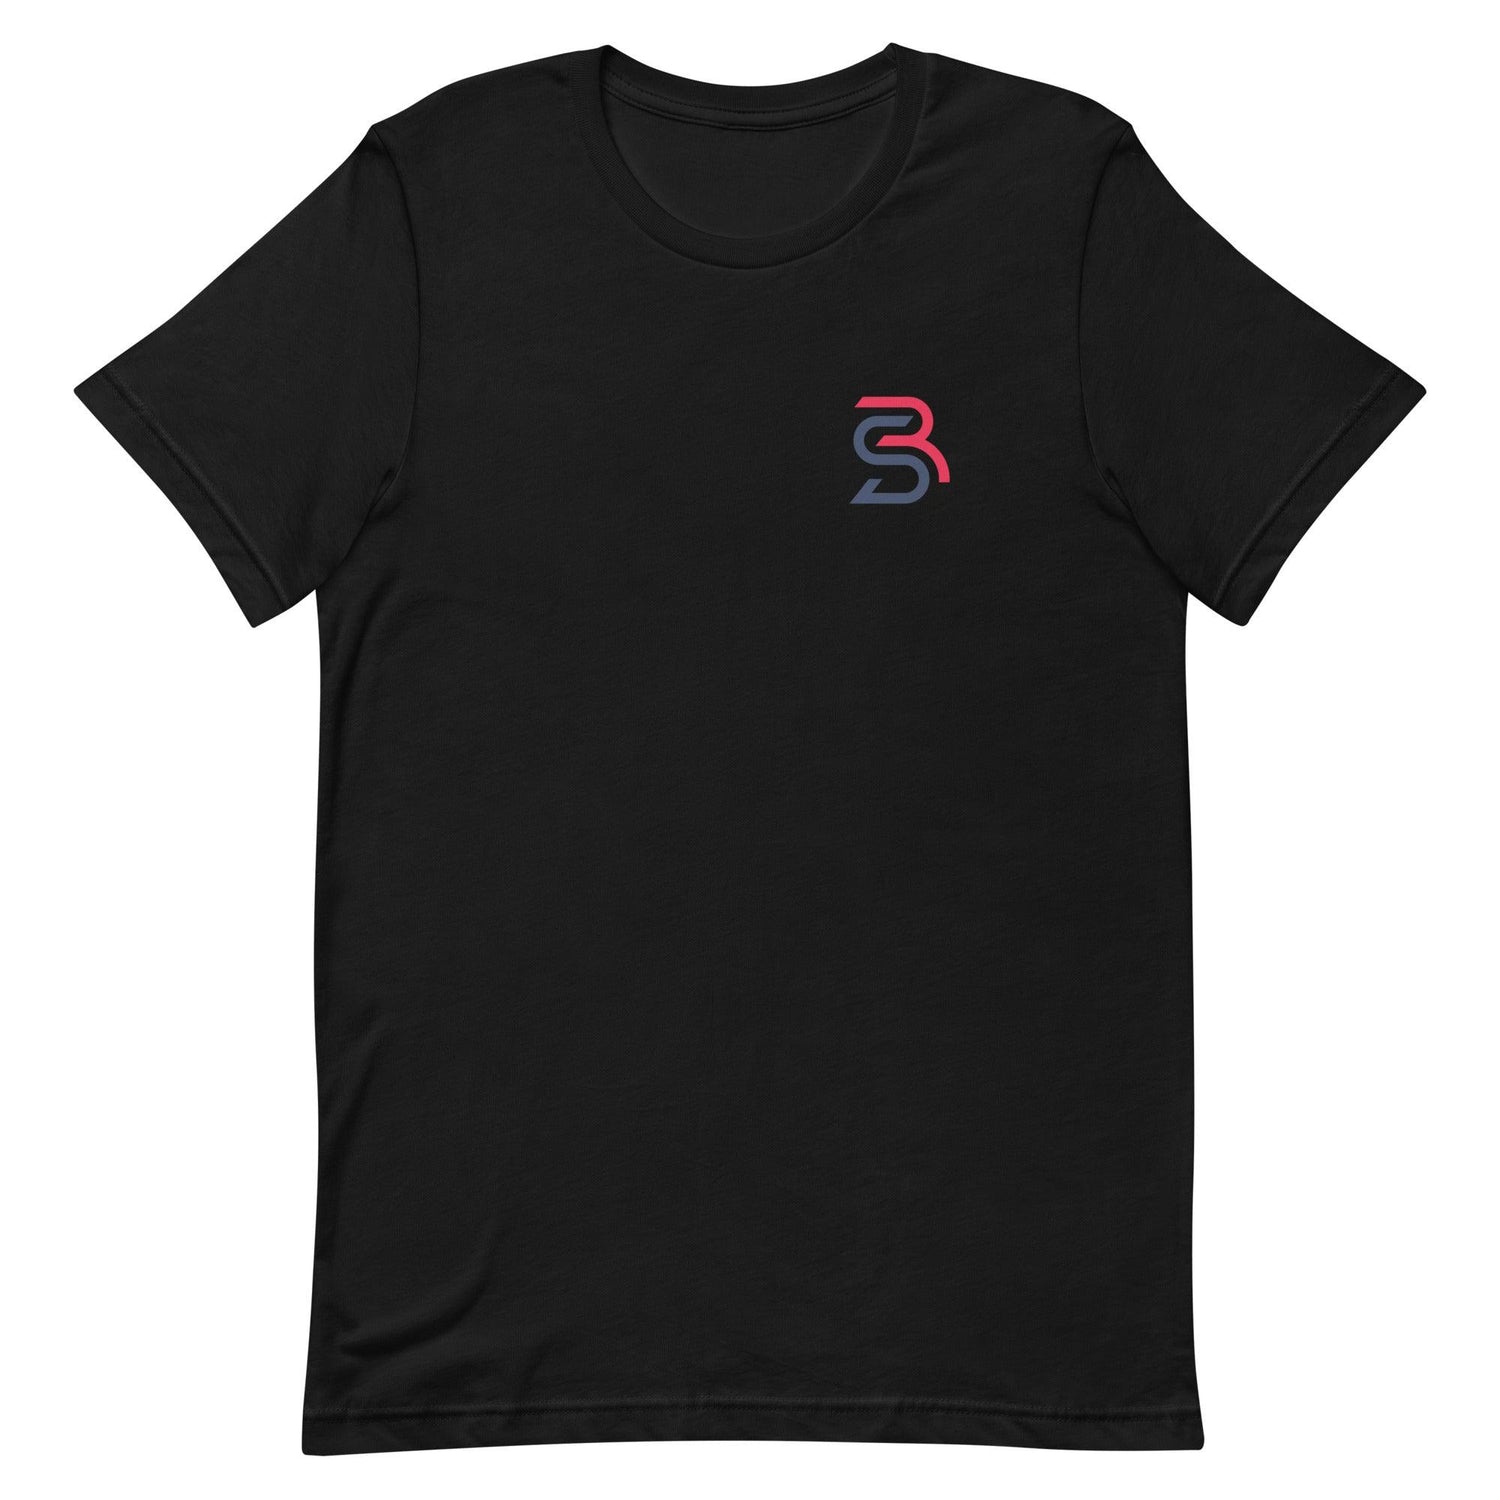 Stephen Ridings “SR” t-shirt - Fan Arch